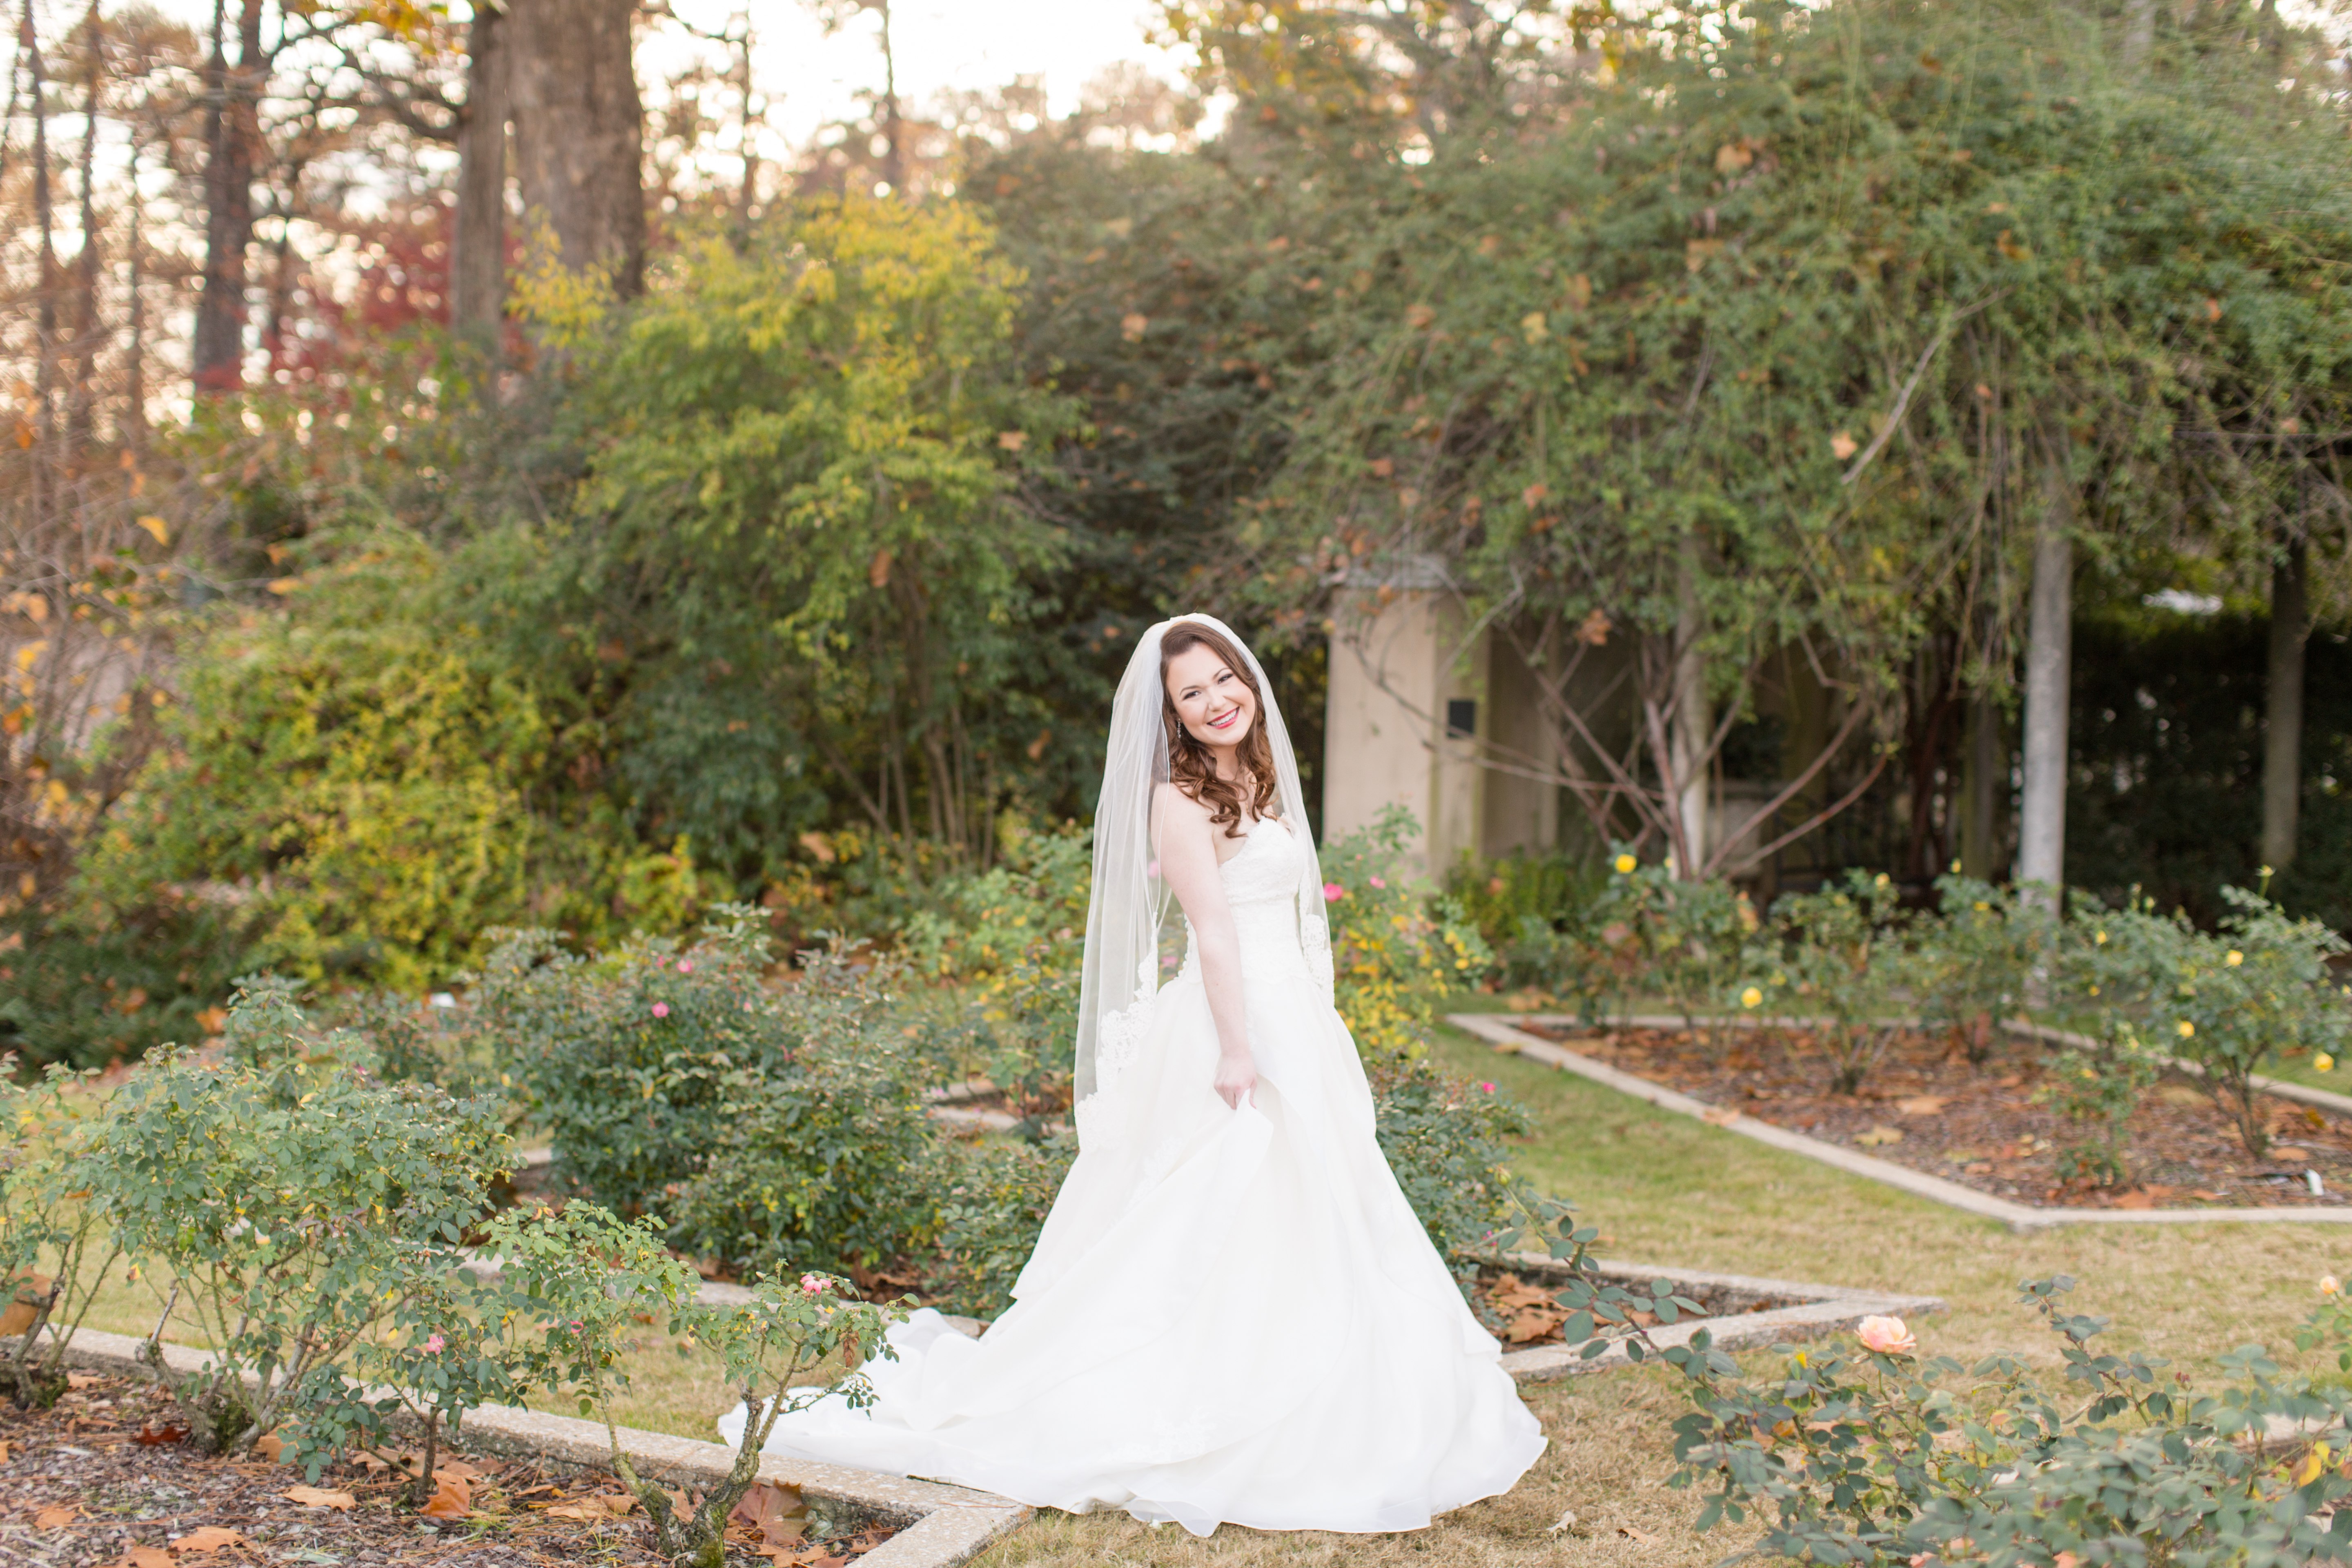 Sarah's Bridal Portraits | Birmingham, Alabama Wedding Photographers Katie & Alec Photography